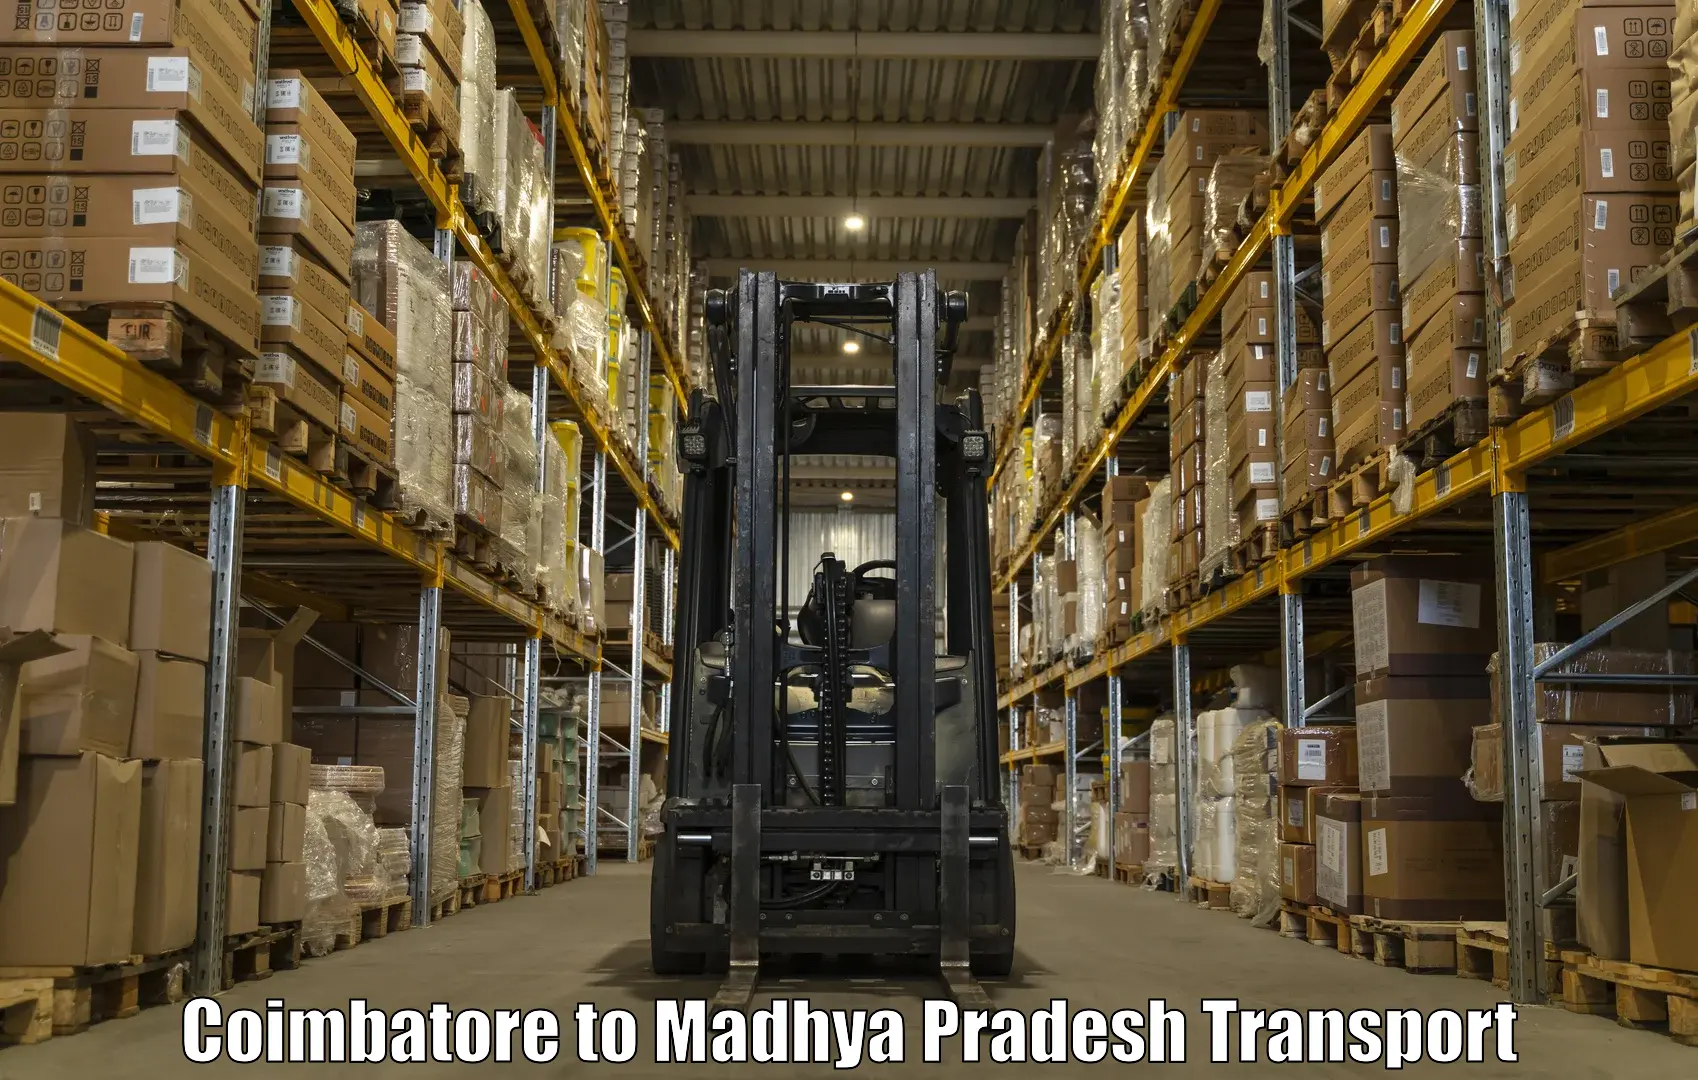 Delivery service Coimbatore to Vidisha